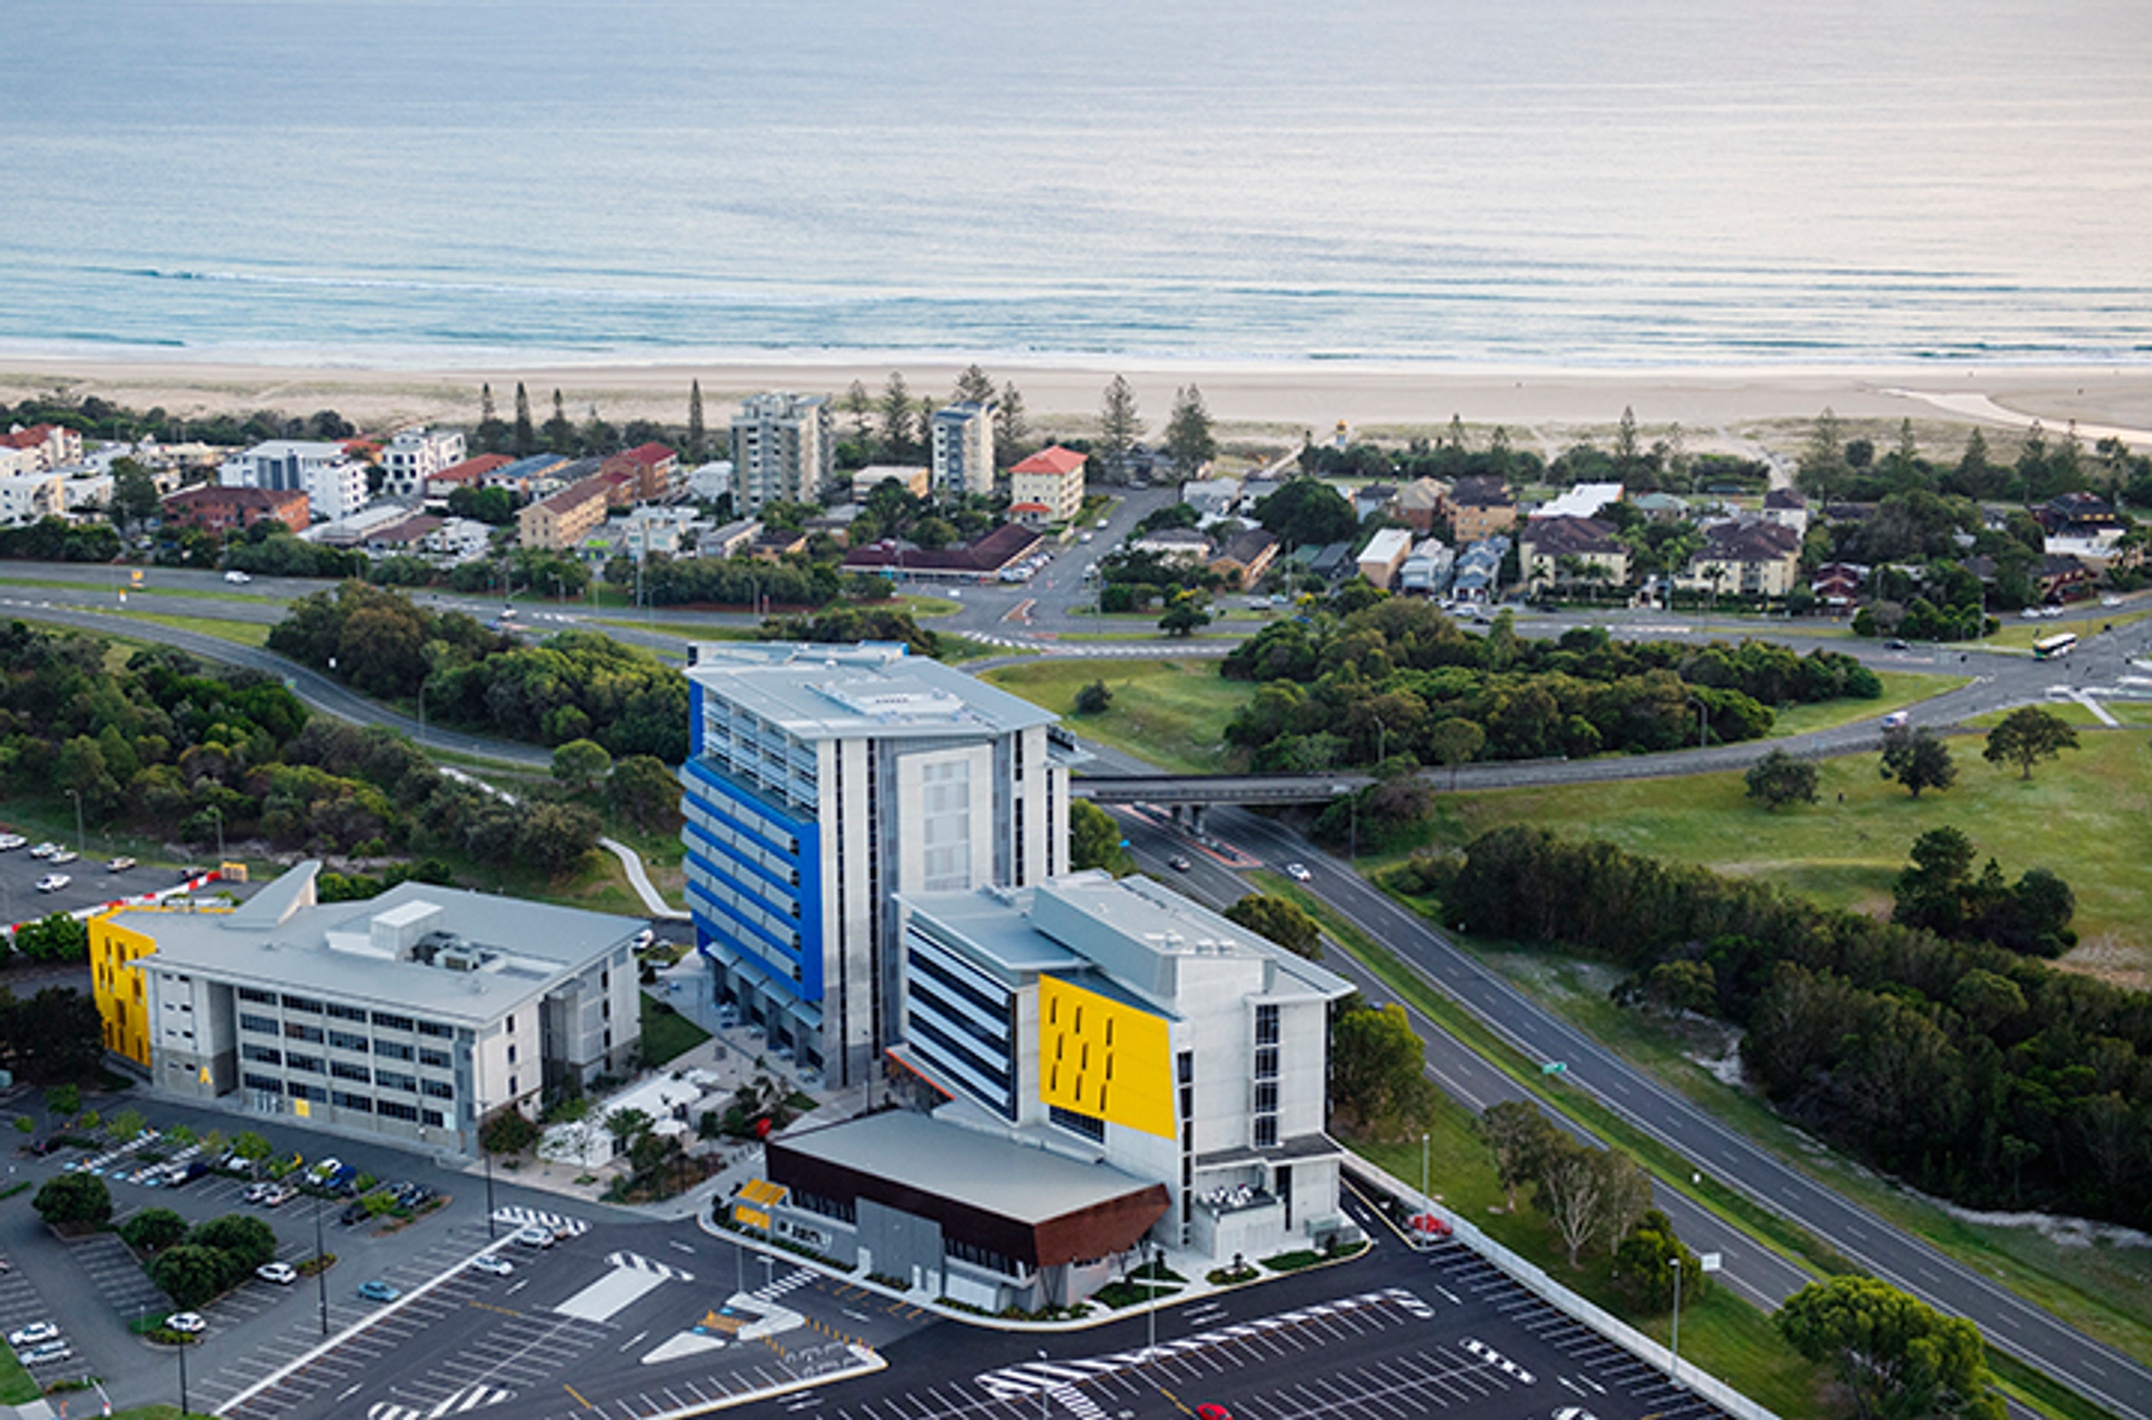 Gold Coast campus aerial overlooking North Kirra beach